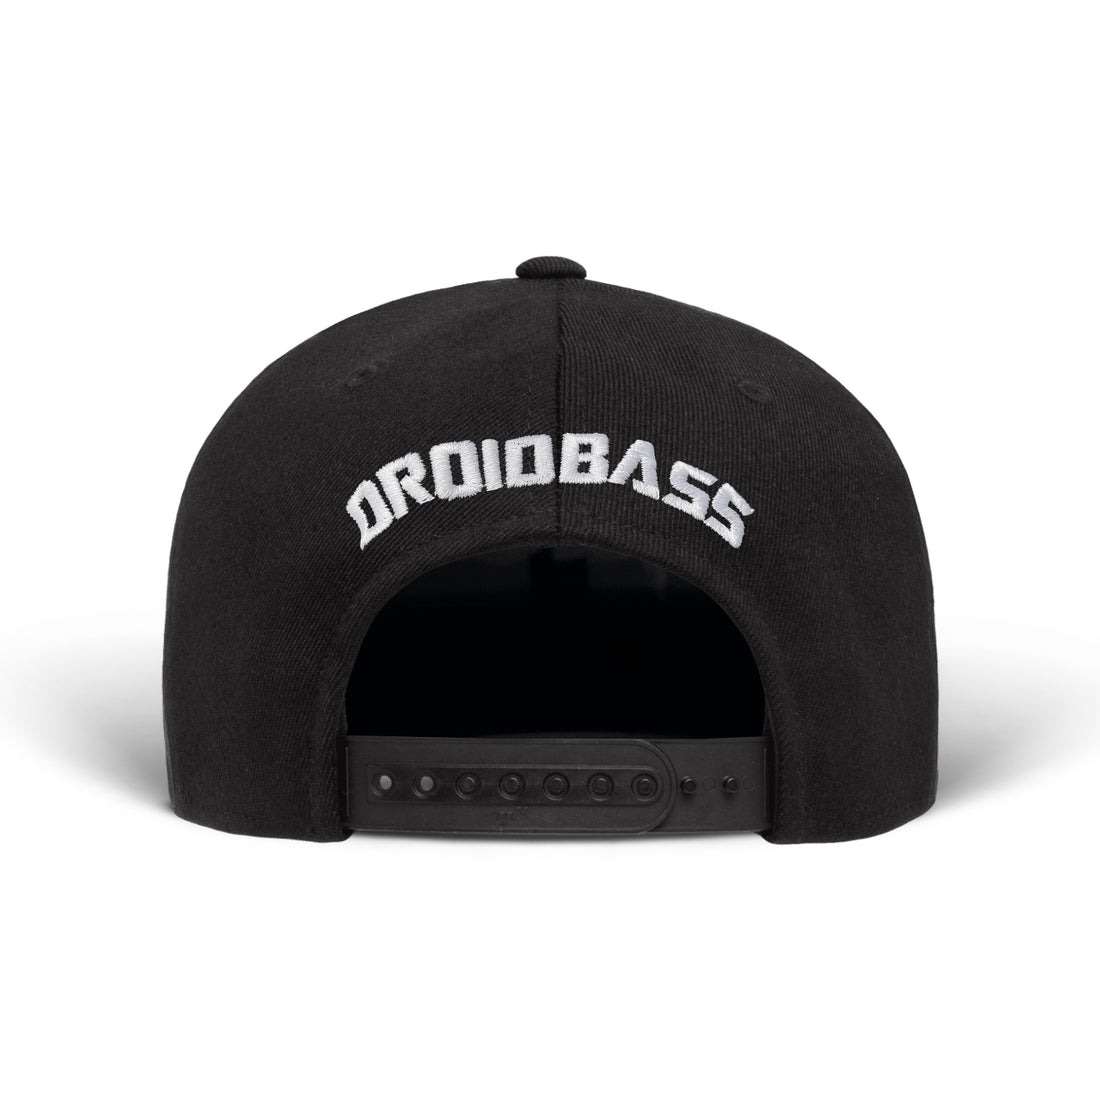 AXEN - DROIDBASS - Snapback Hat